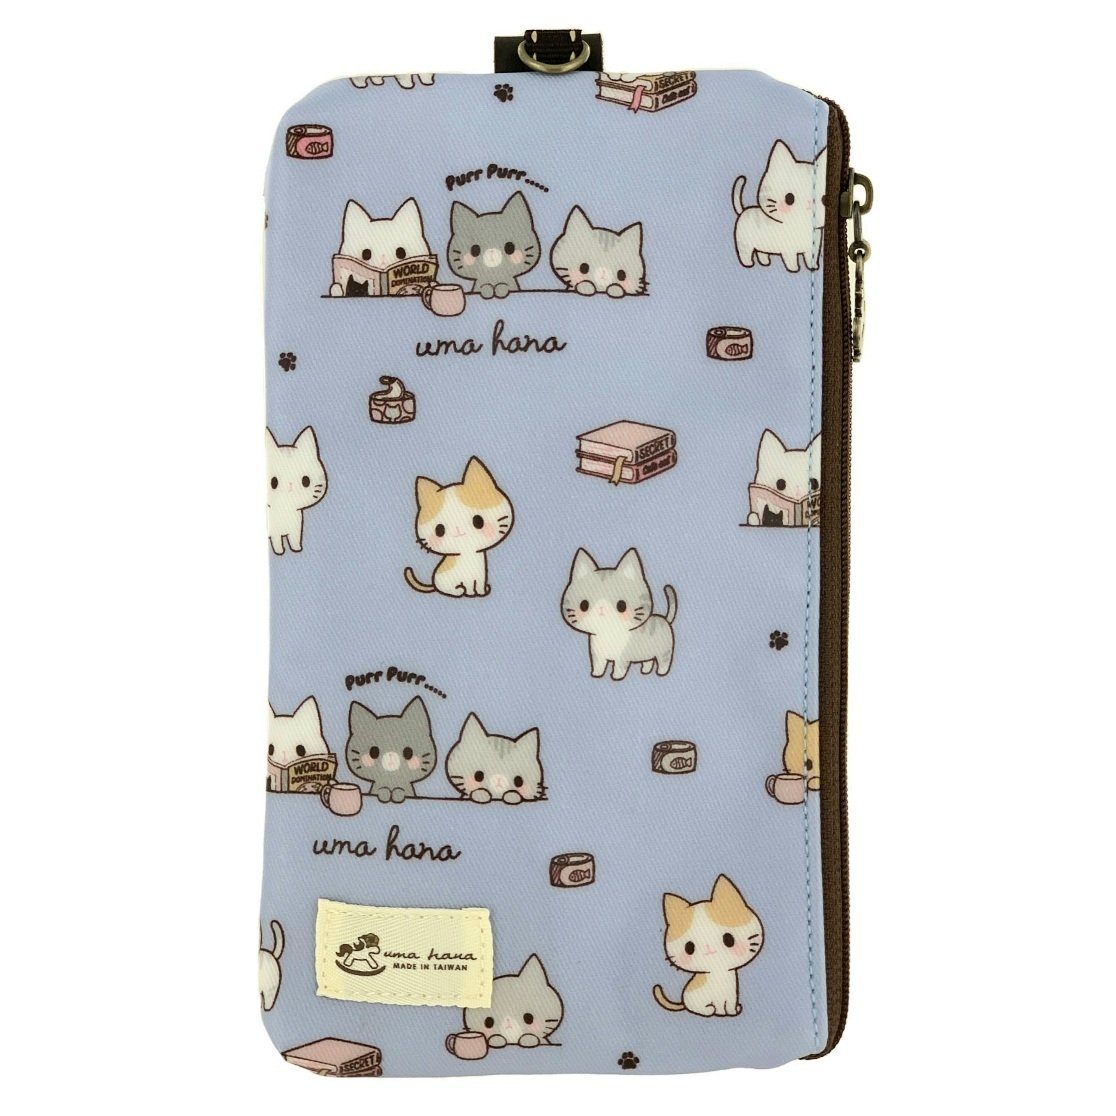 Periwinkle Blue Meow Cat Phone Pouch Phone Pouch Tworgis 